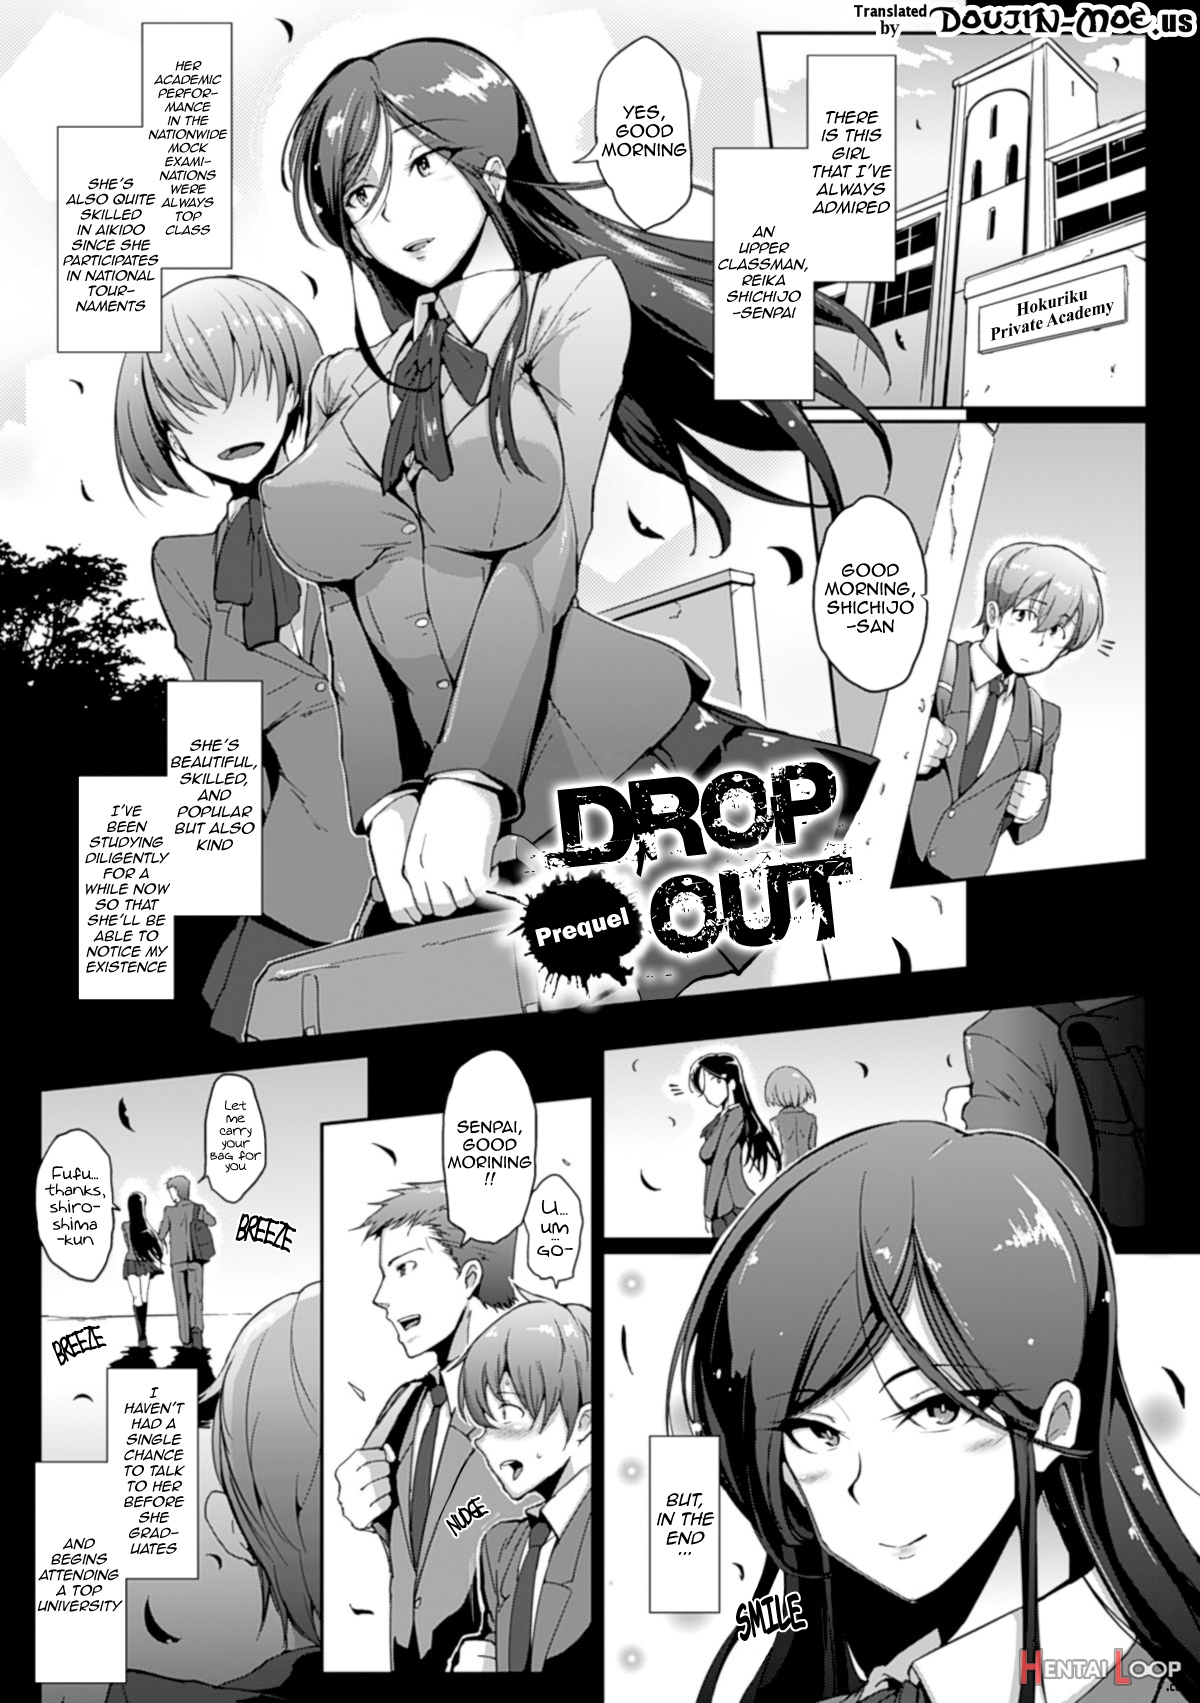 Dropout page 4